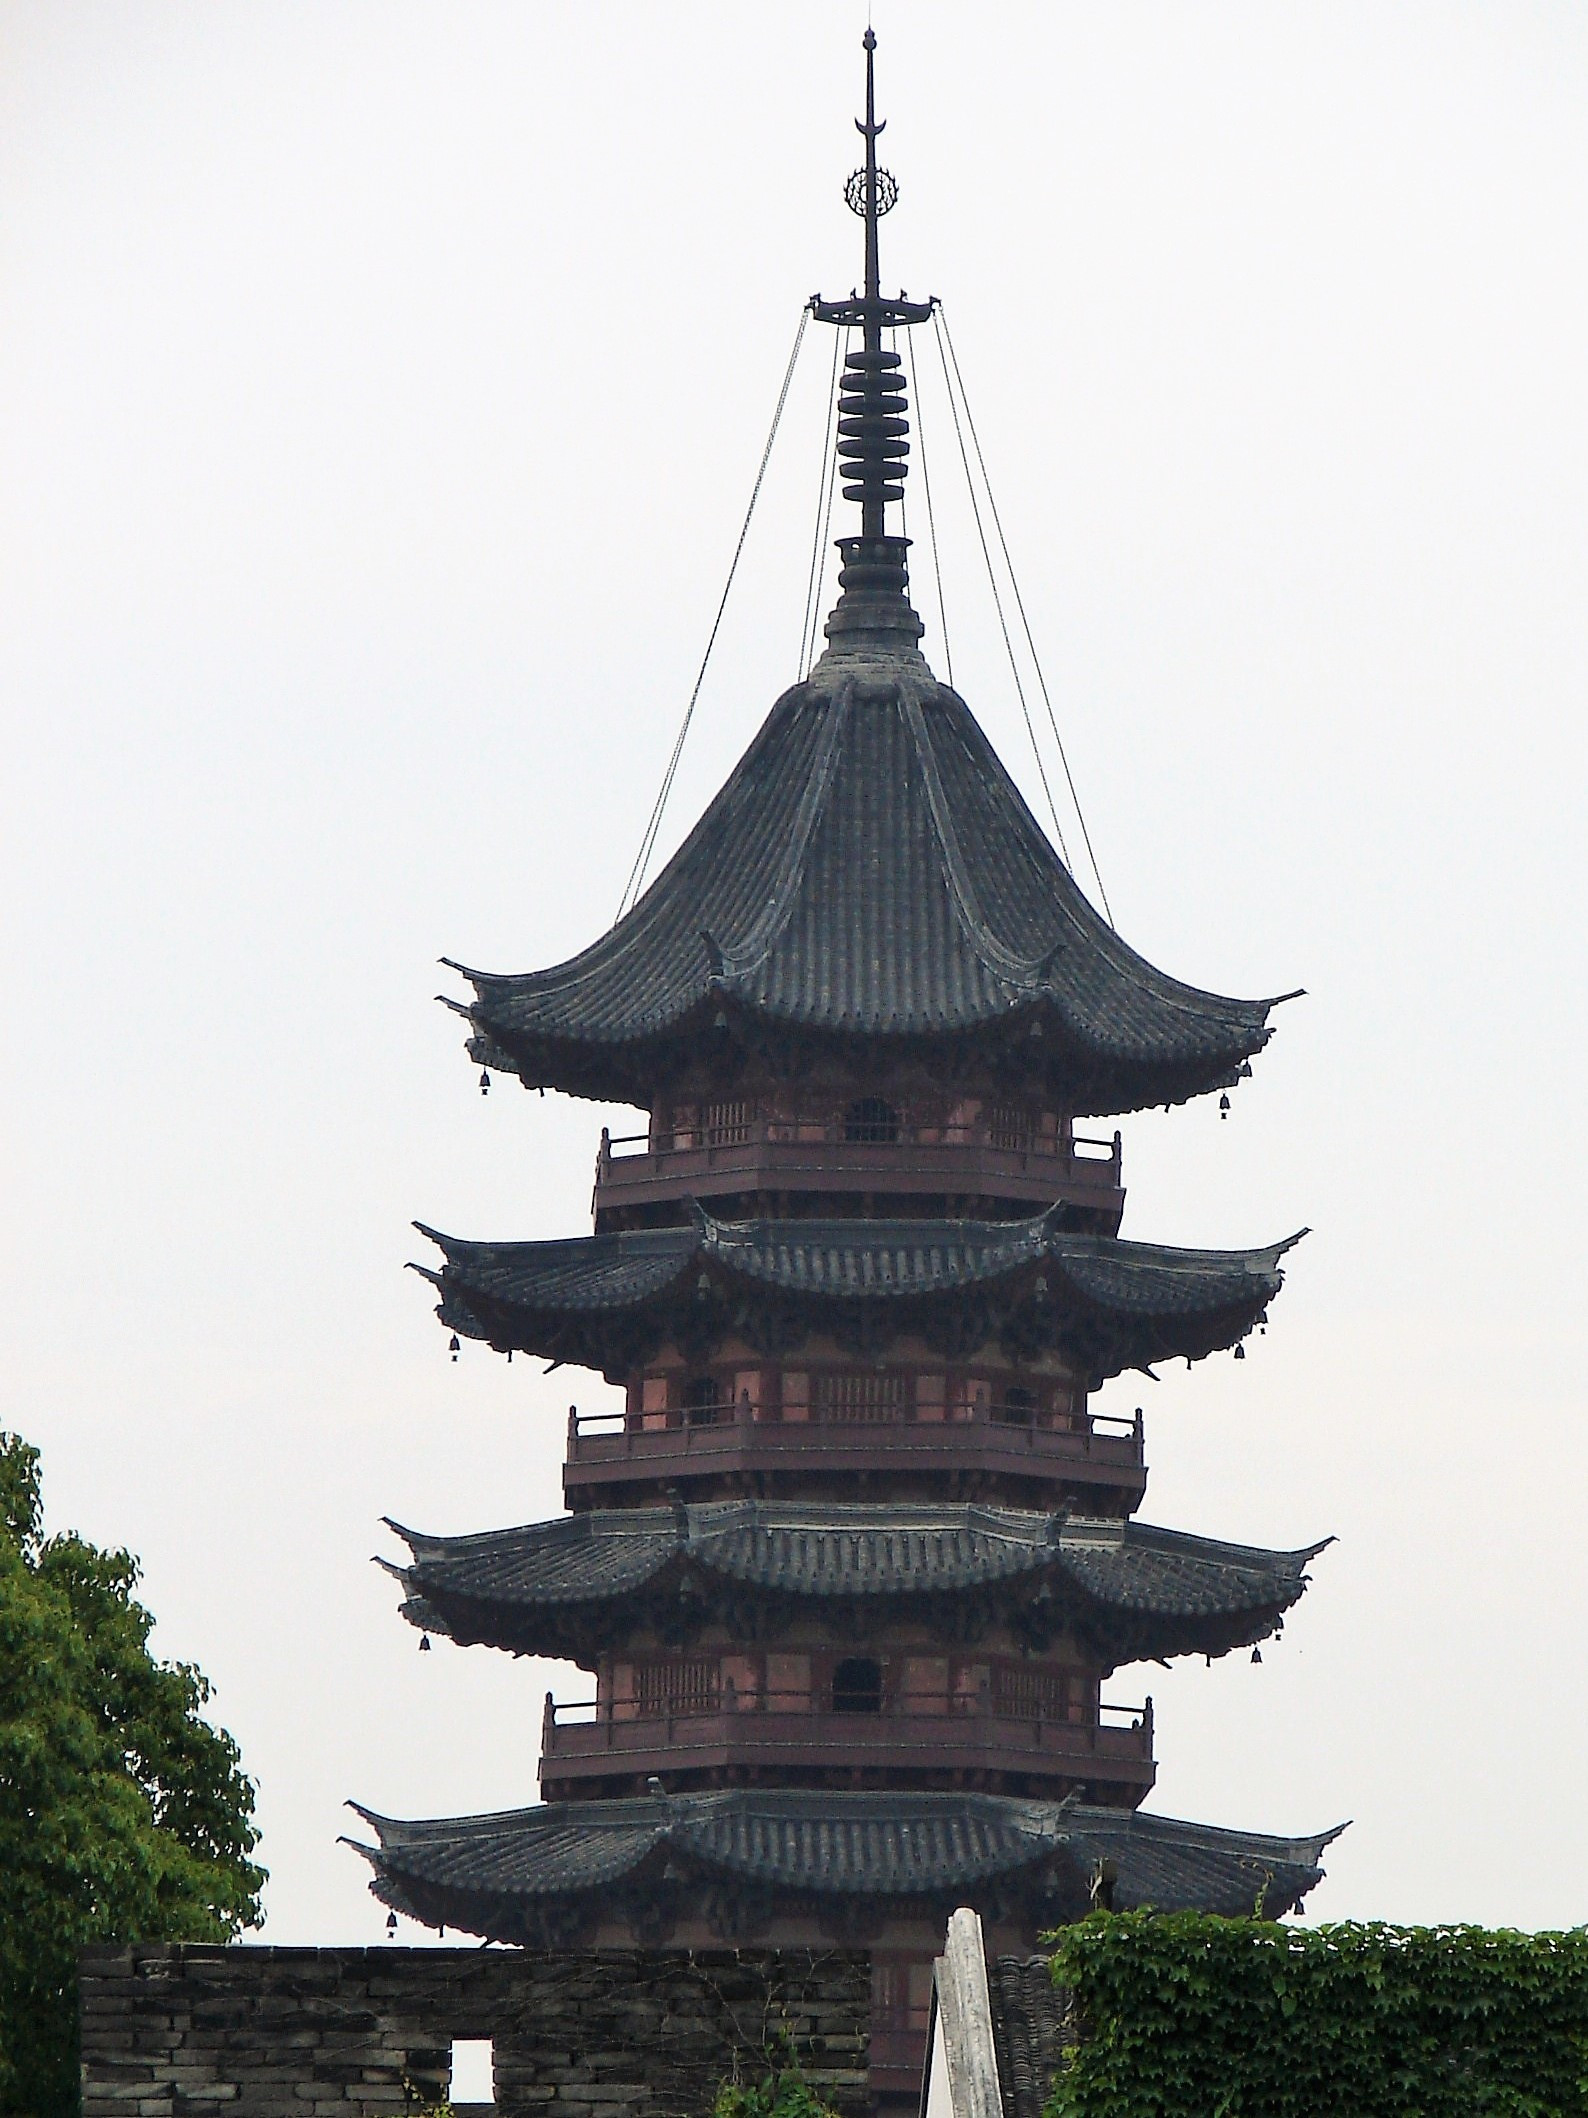 Ruiguang Tower